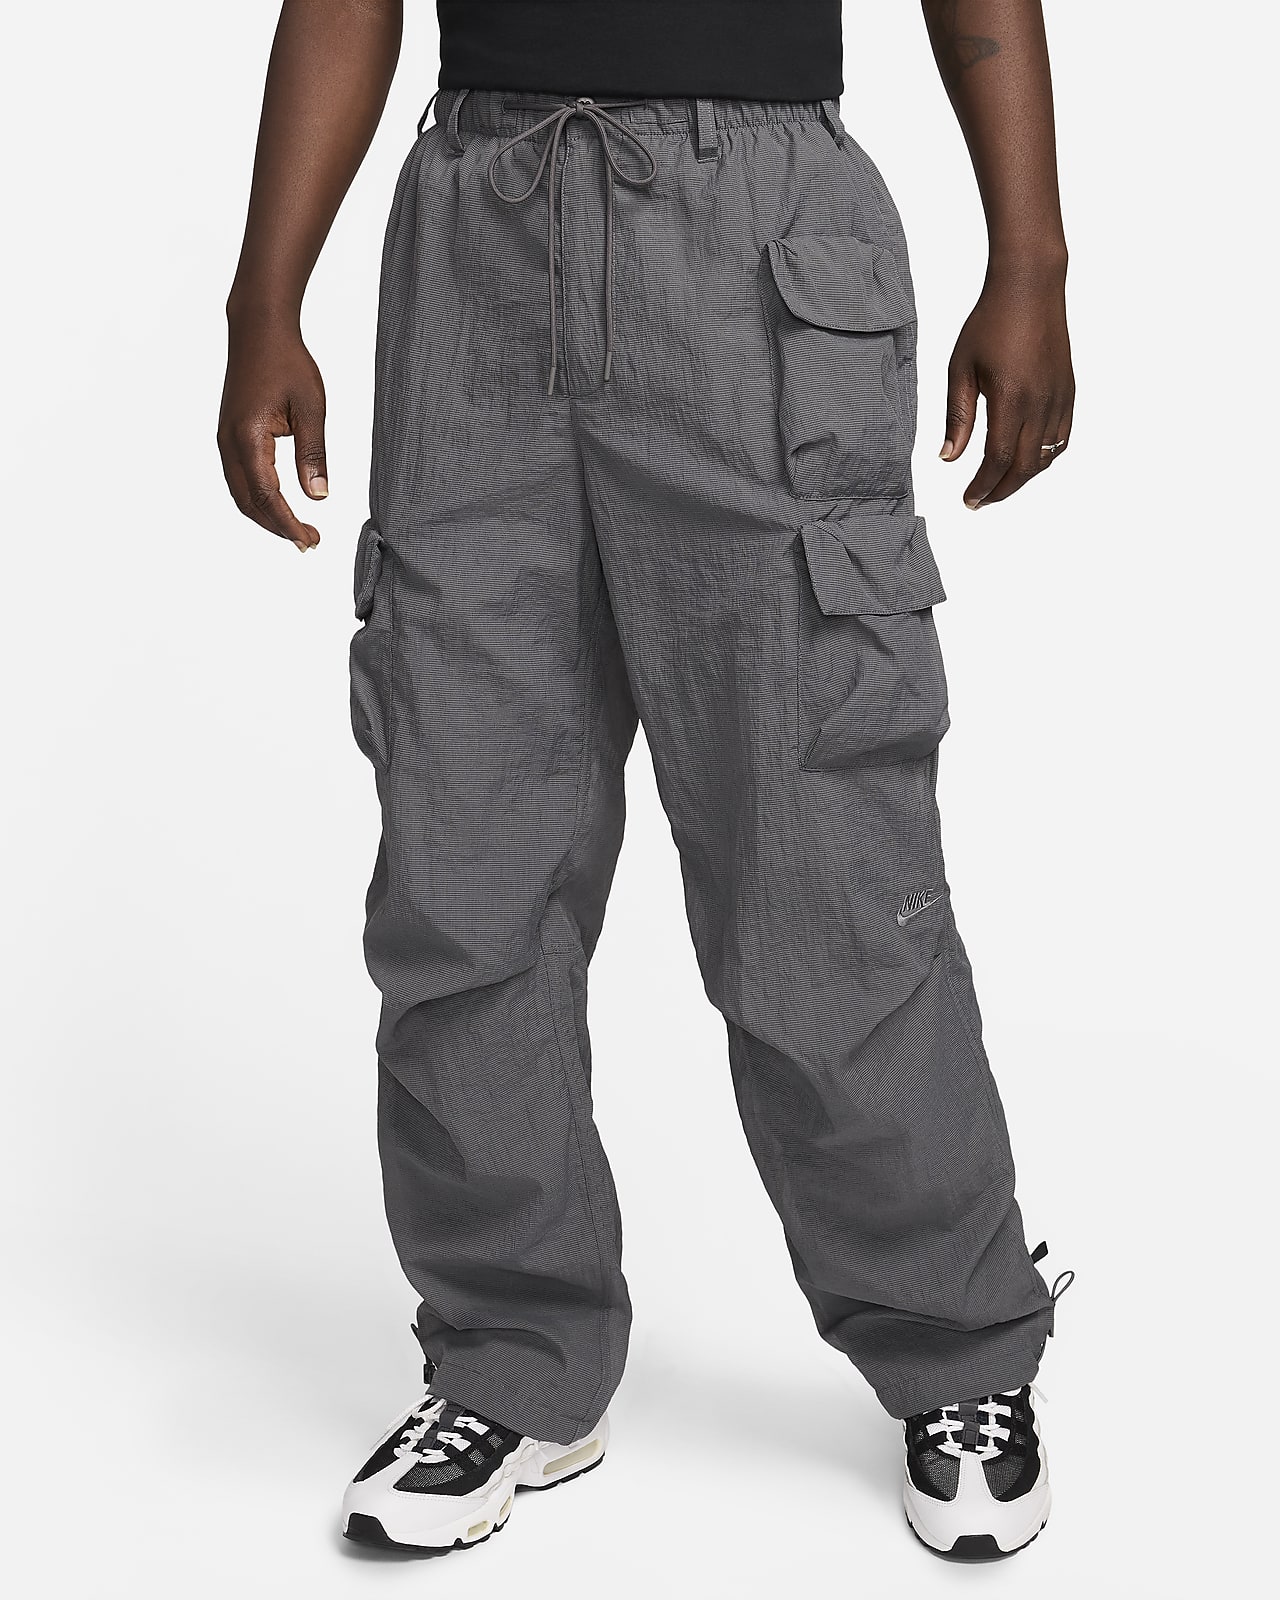 Pantalon doublé en tissu tissé Nike Sportswear Tech Pack pour homme